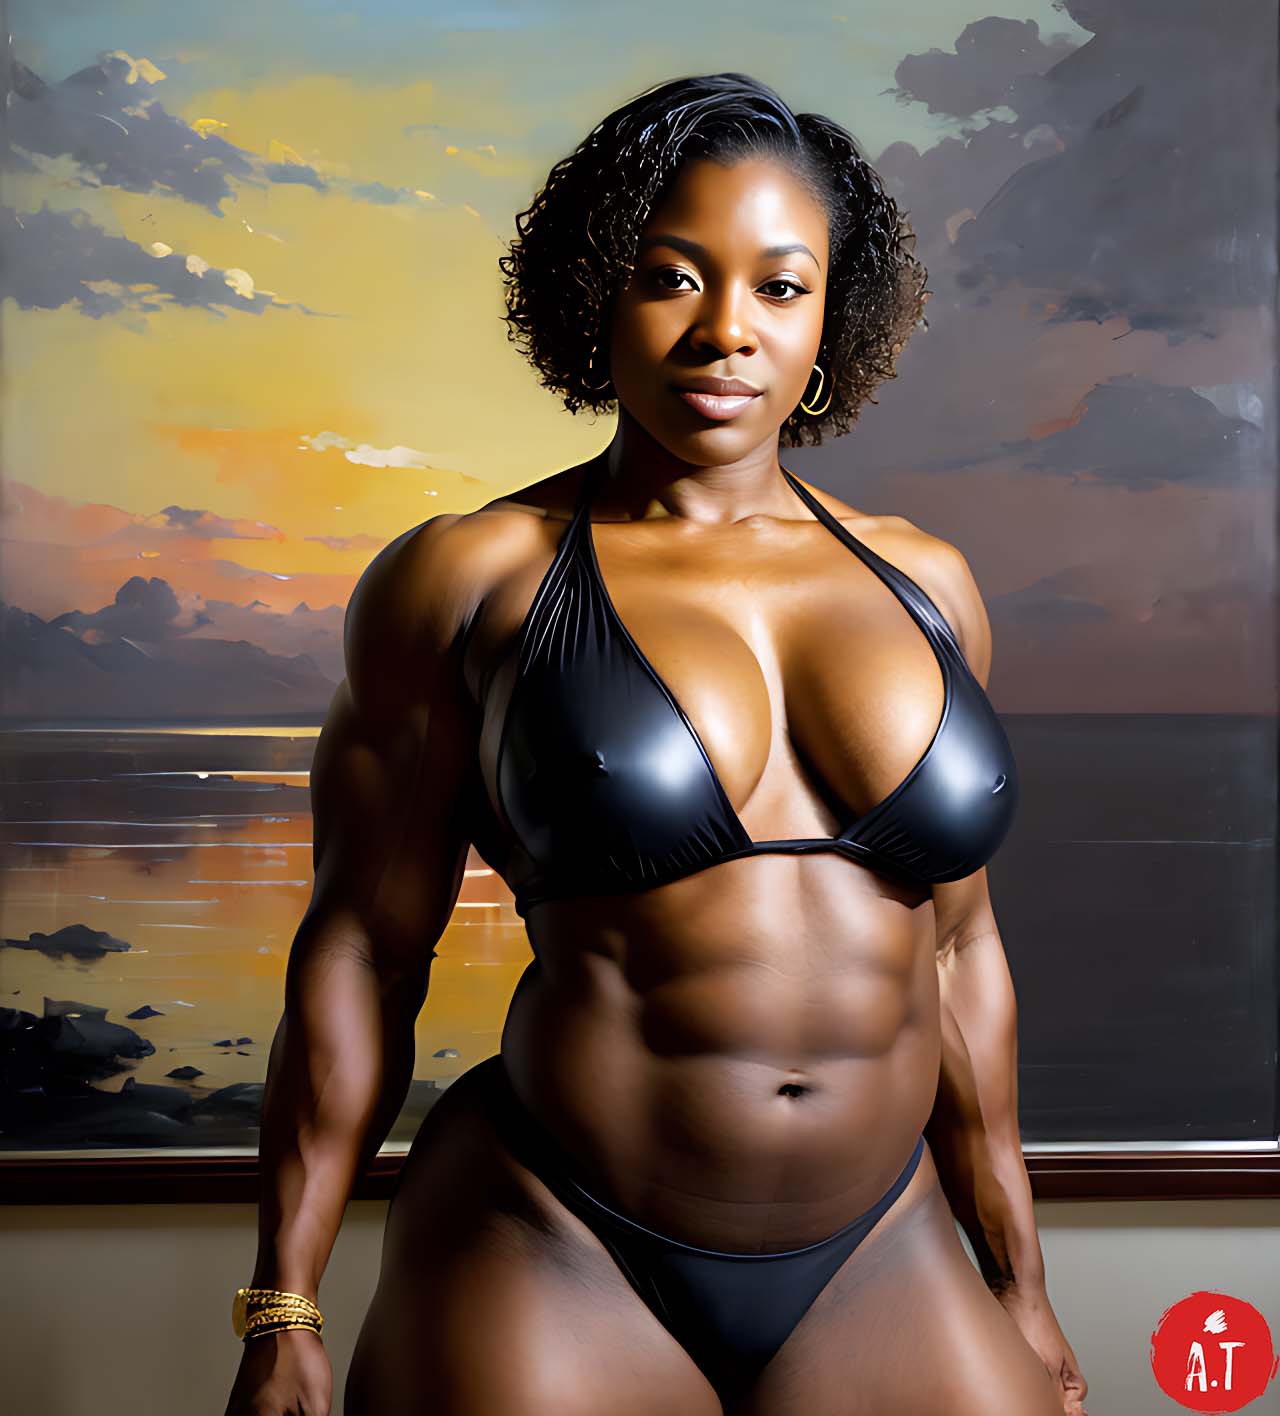 2-professional_half_body_photo_38_years_old_Ivorian_huge_muscular_woman_bodybuilder_top_view_B...jpg